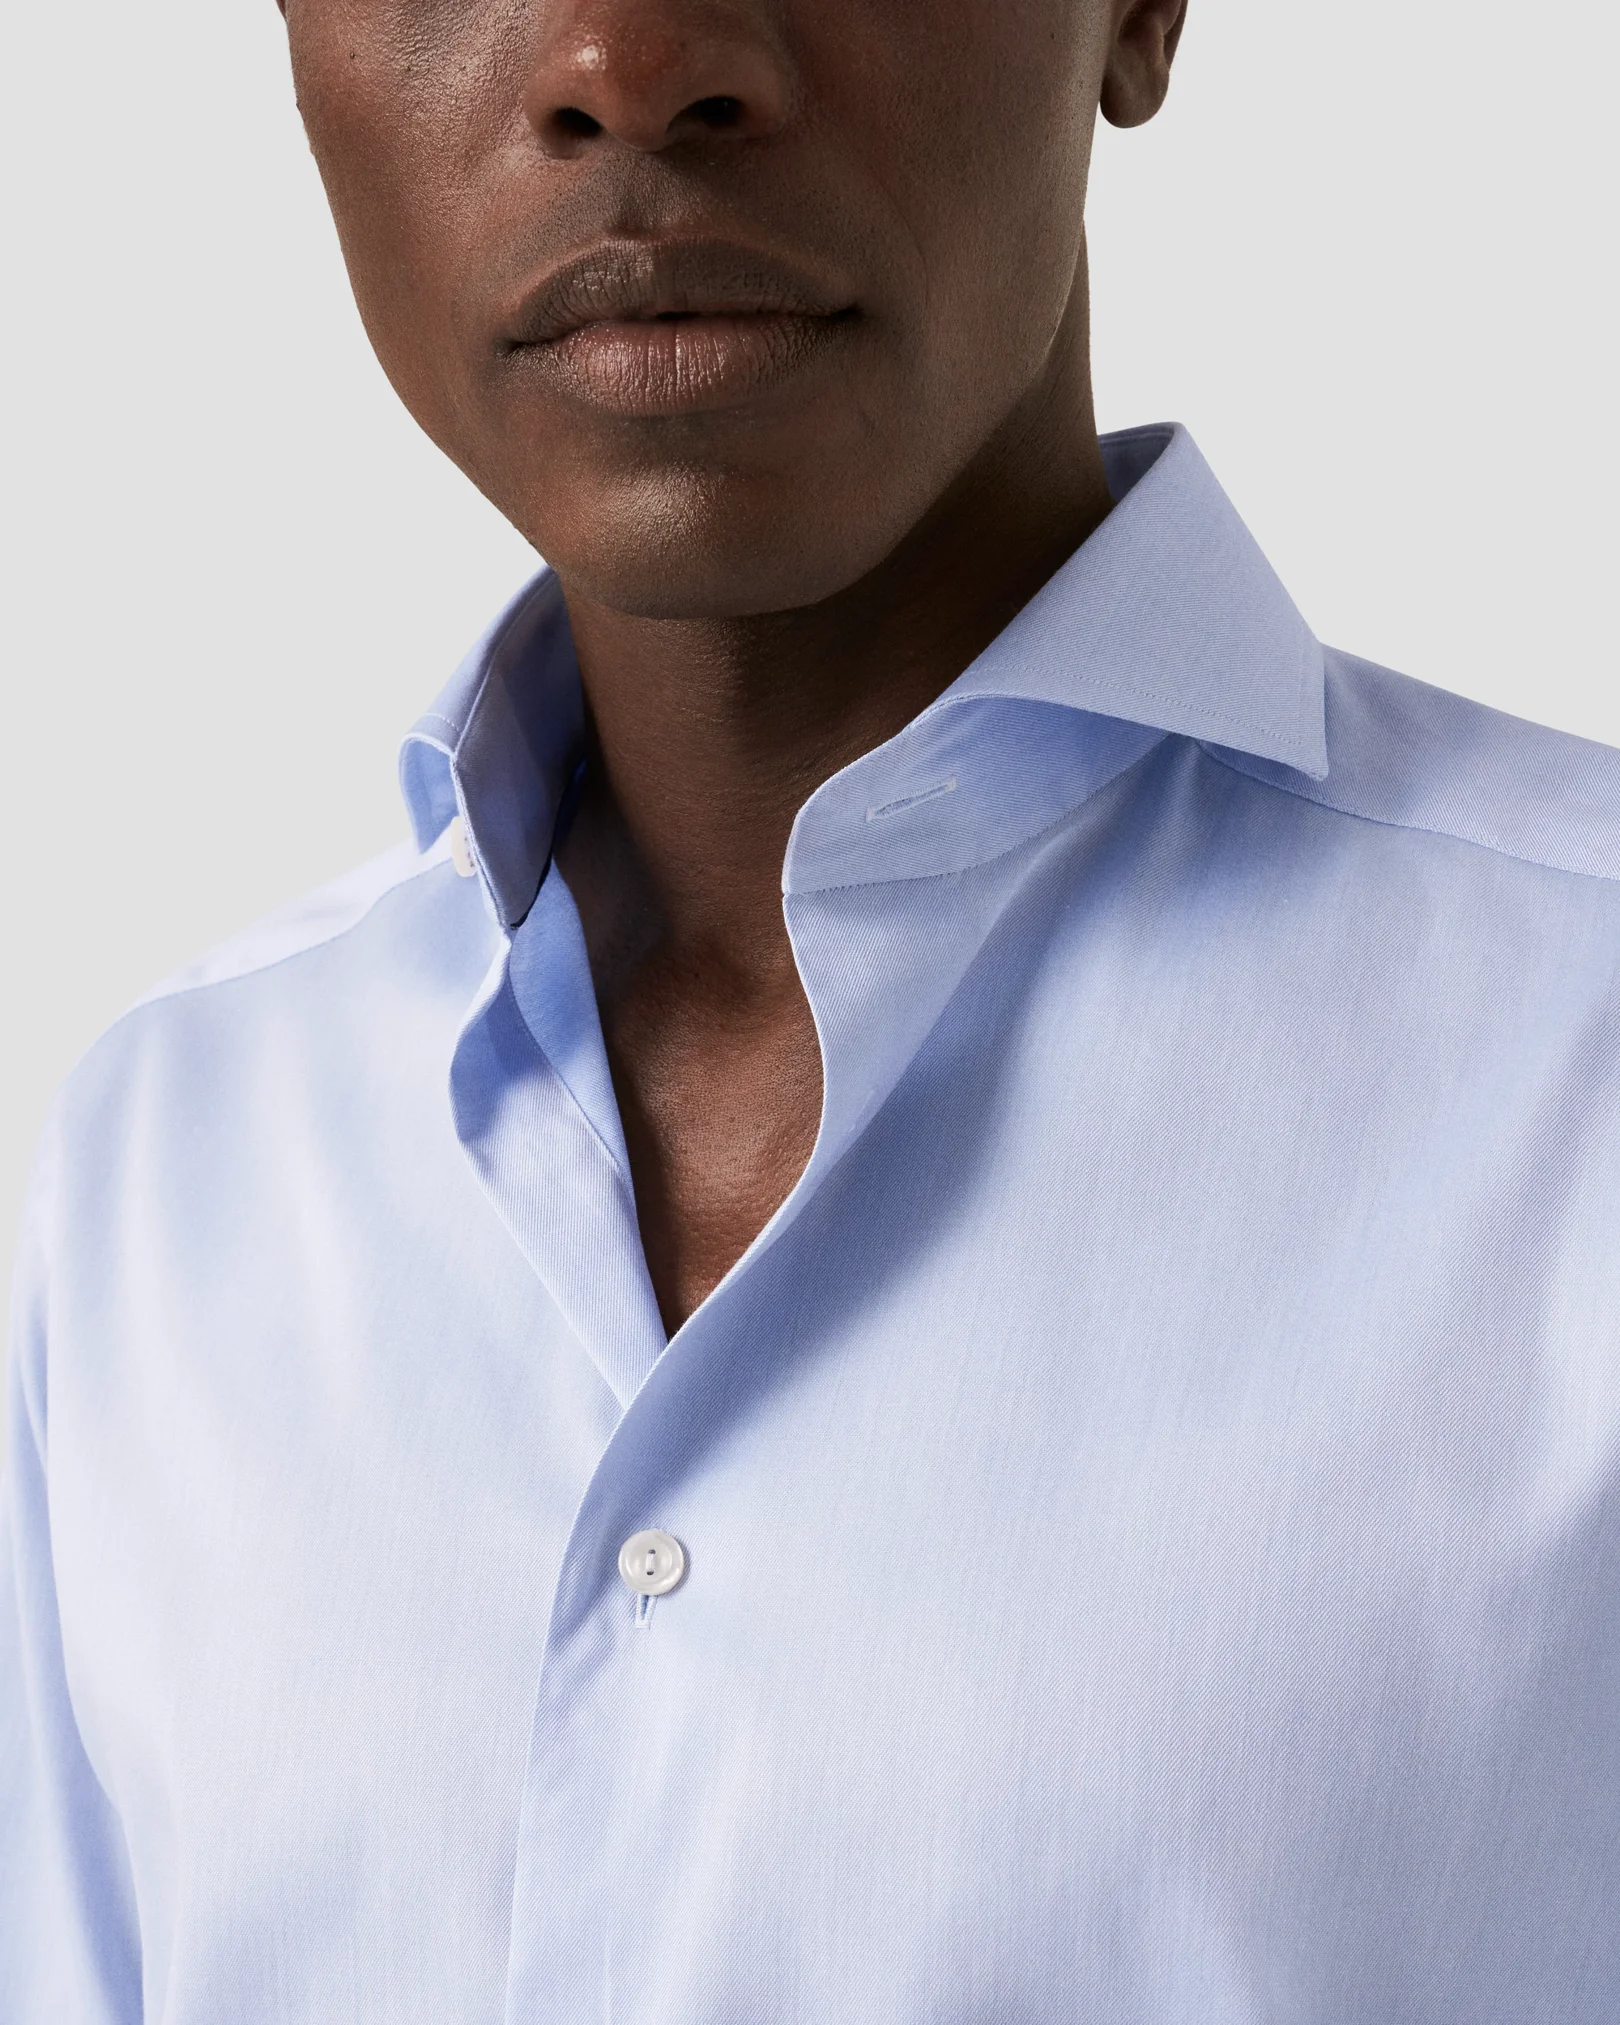 Eton - Light Blue Signature Twill Shirt - Extreme Cut Away